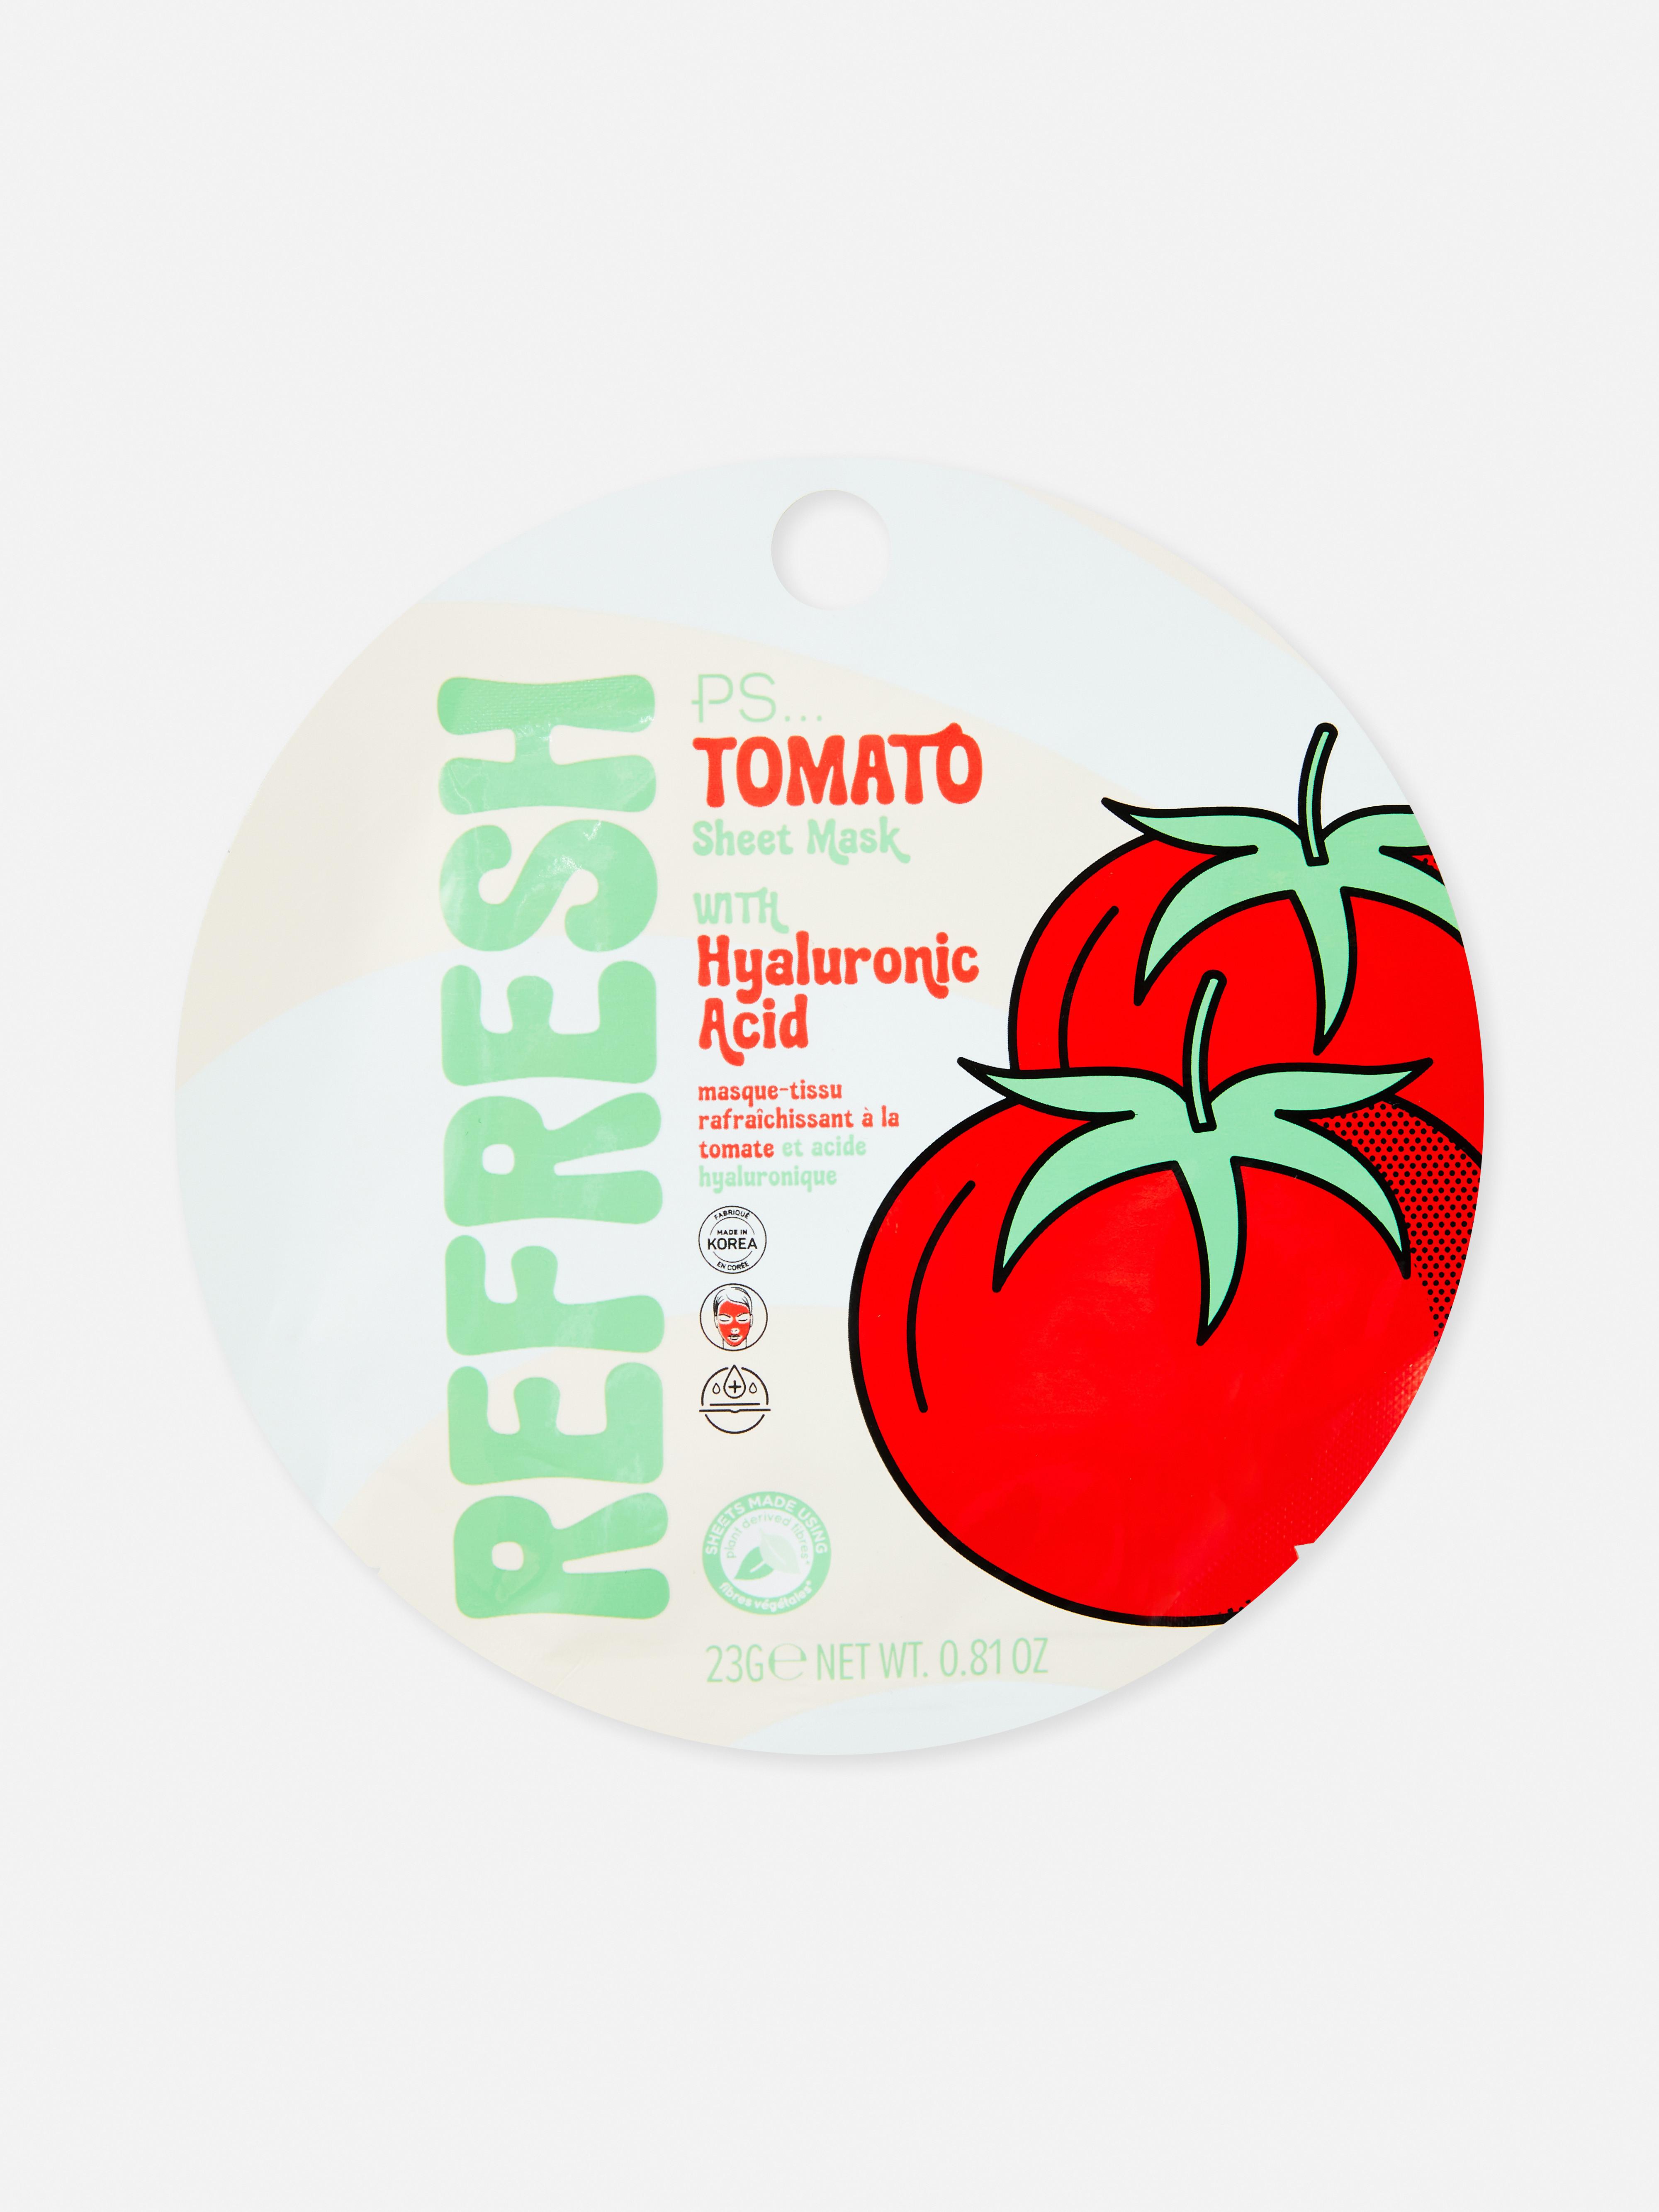 Tomato & Hyaluronic Acid Sheet Mask